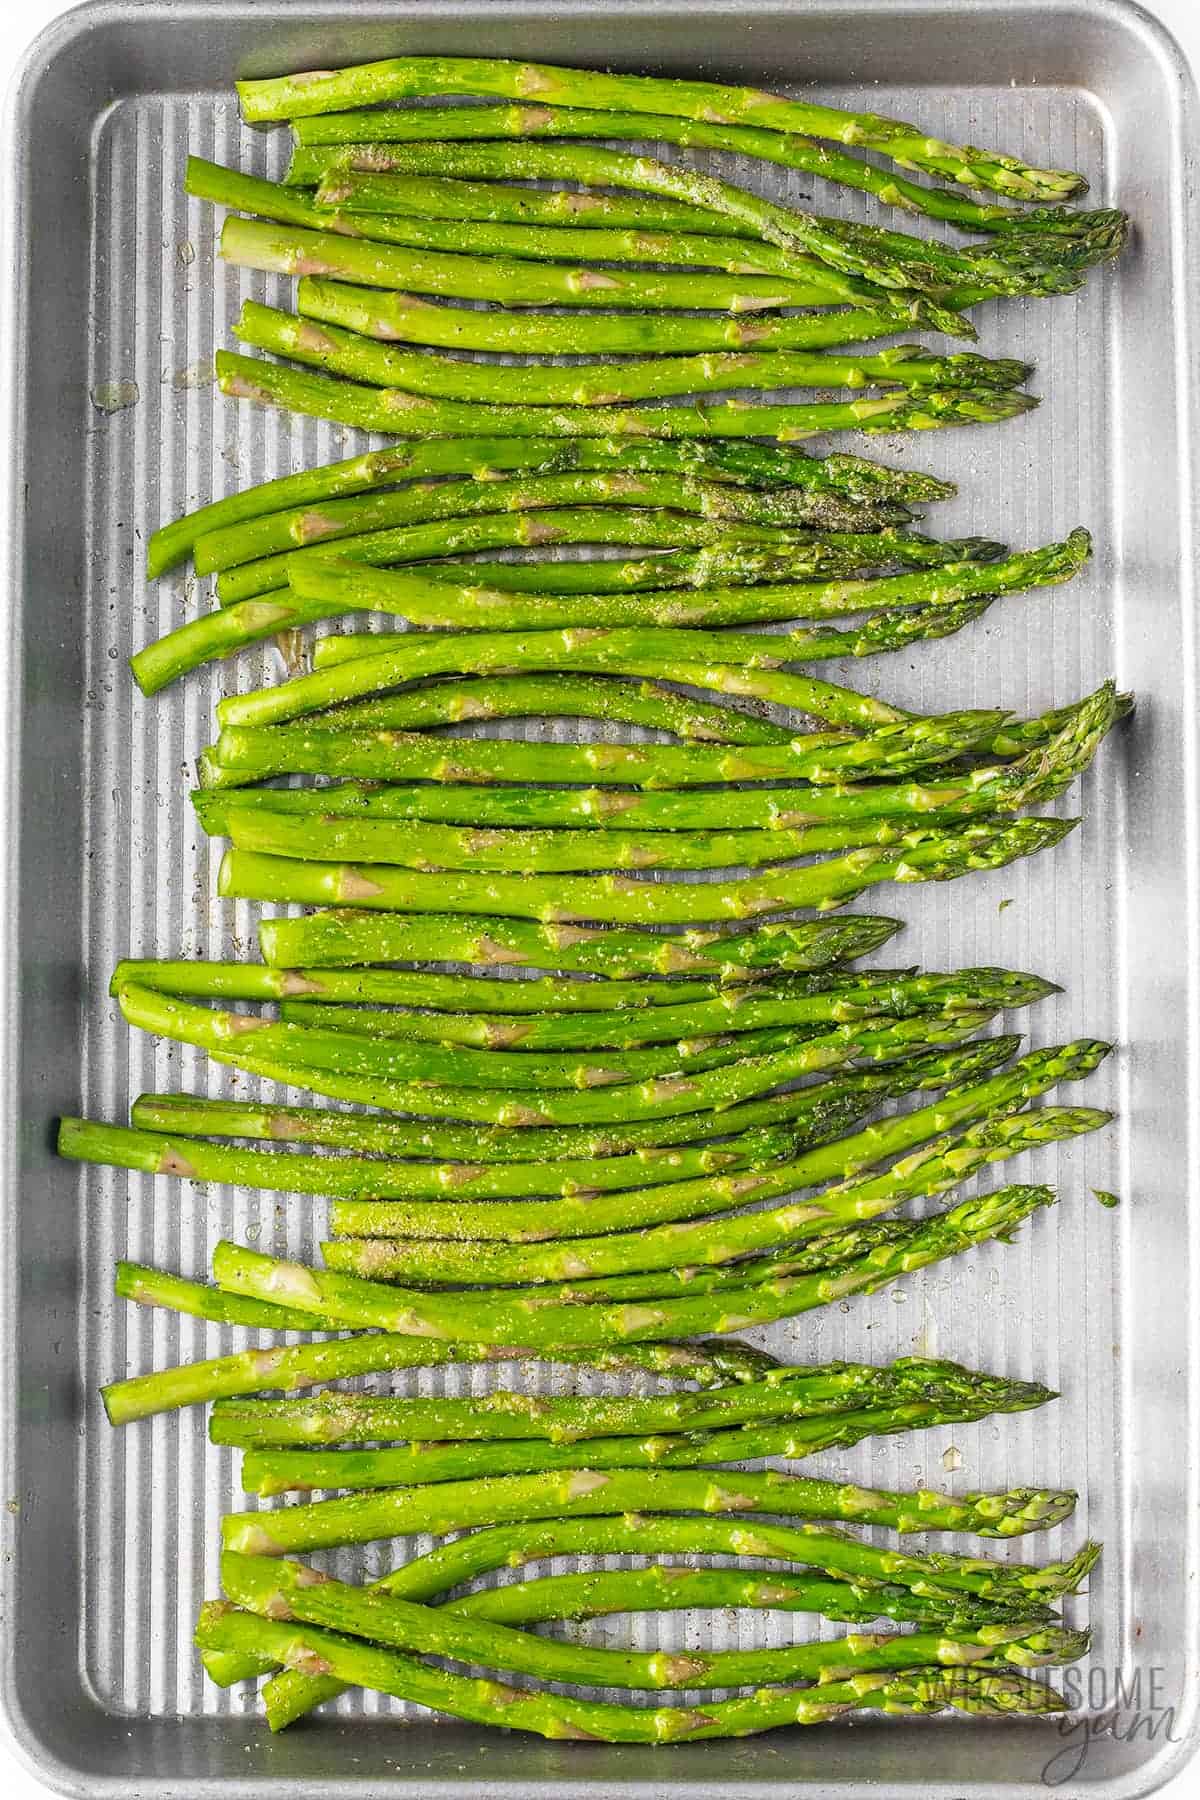 Seasoned asparagus on a sheet pan.